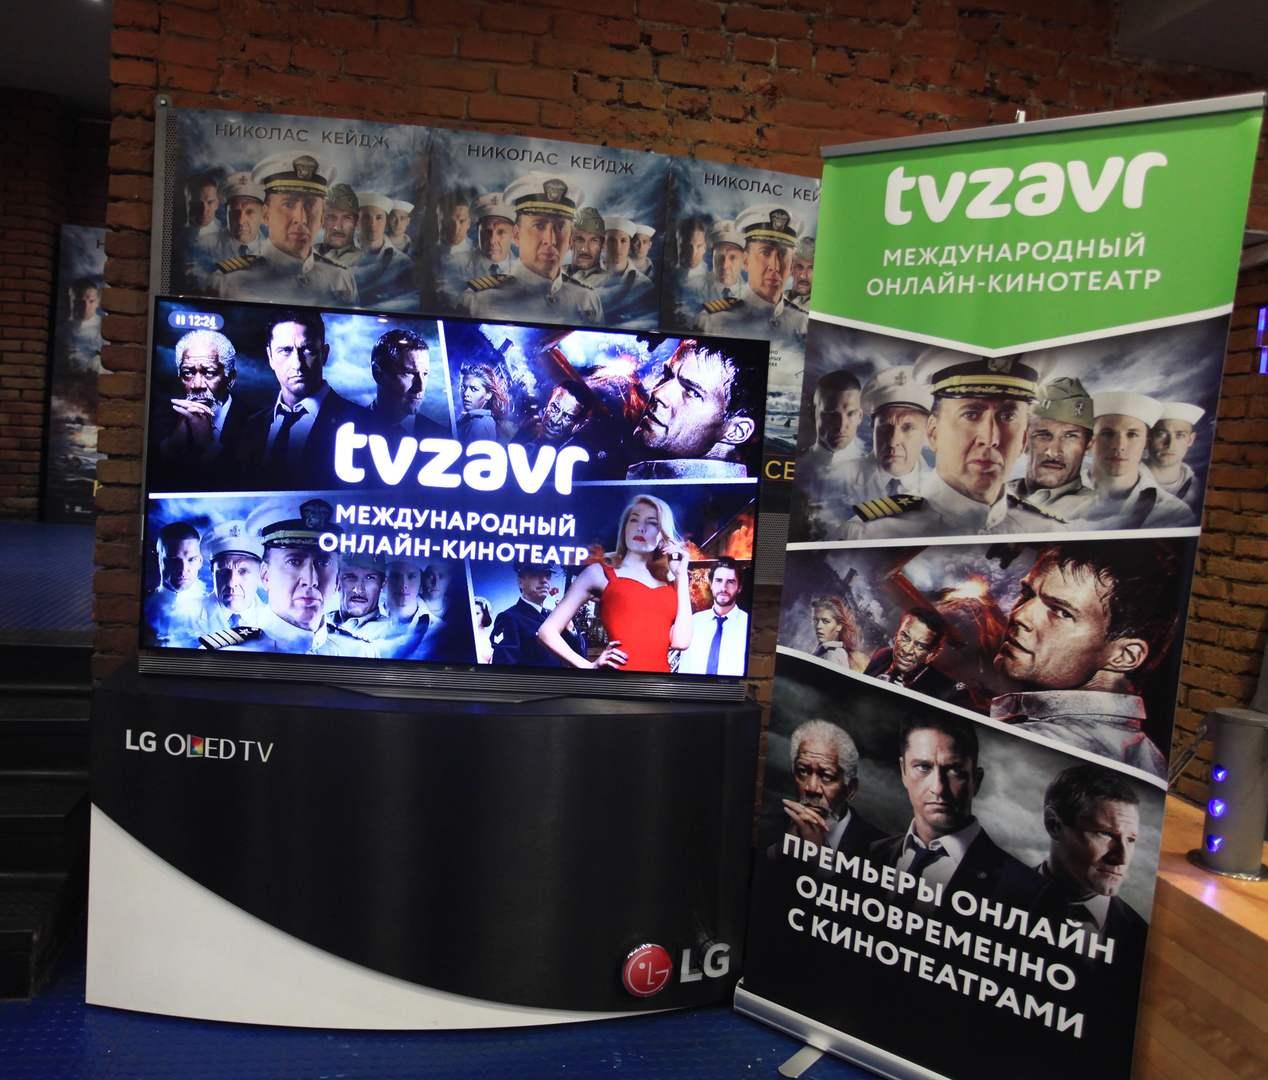 Tvzavr оказался под угрозой банкротства из-за долгов перед своими кредиторами